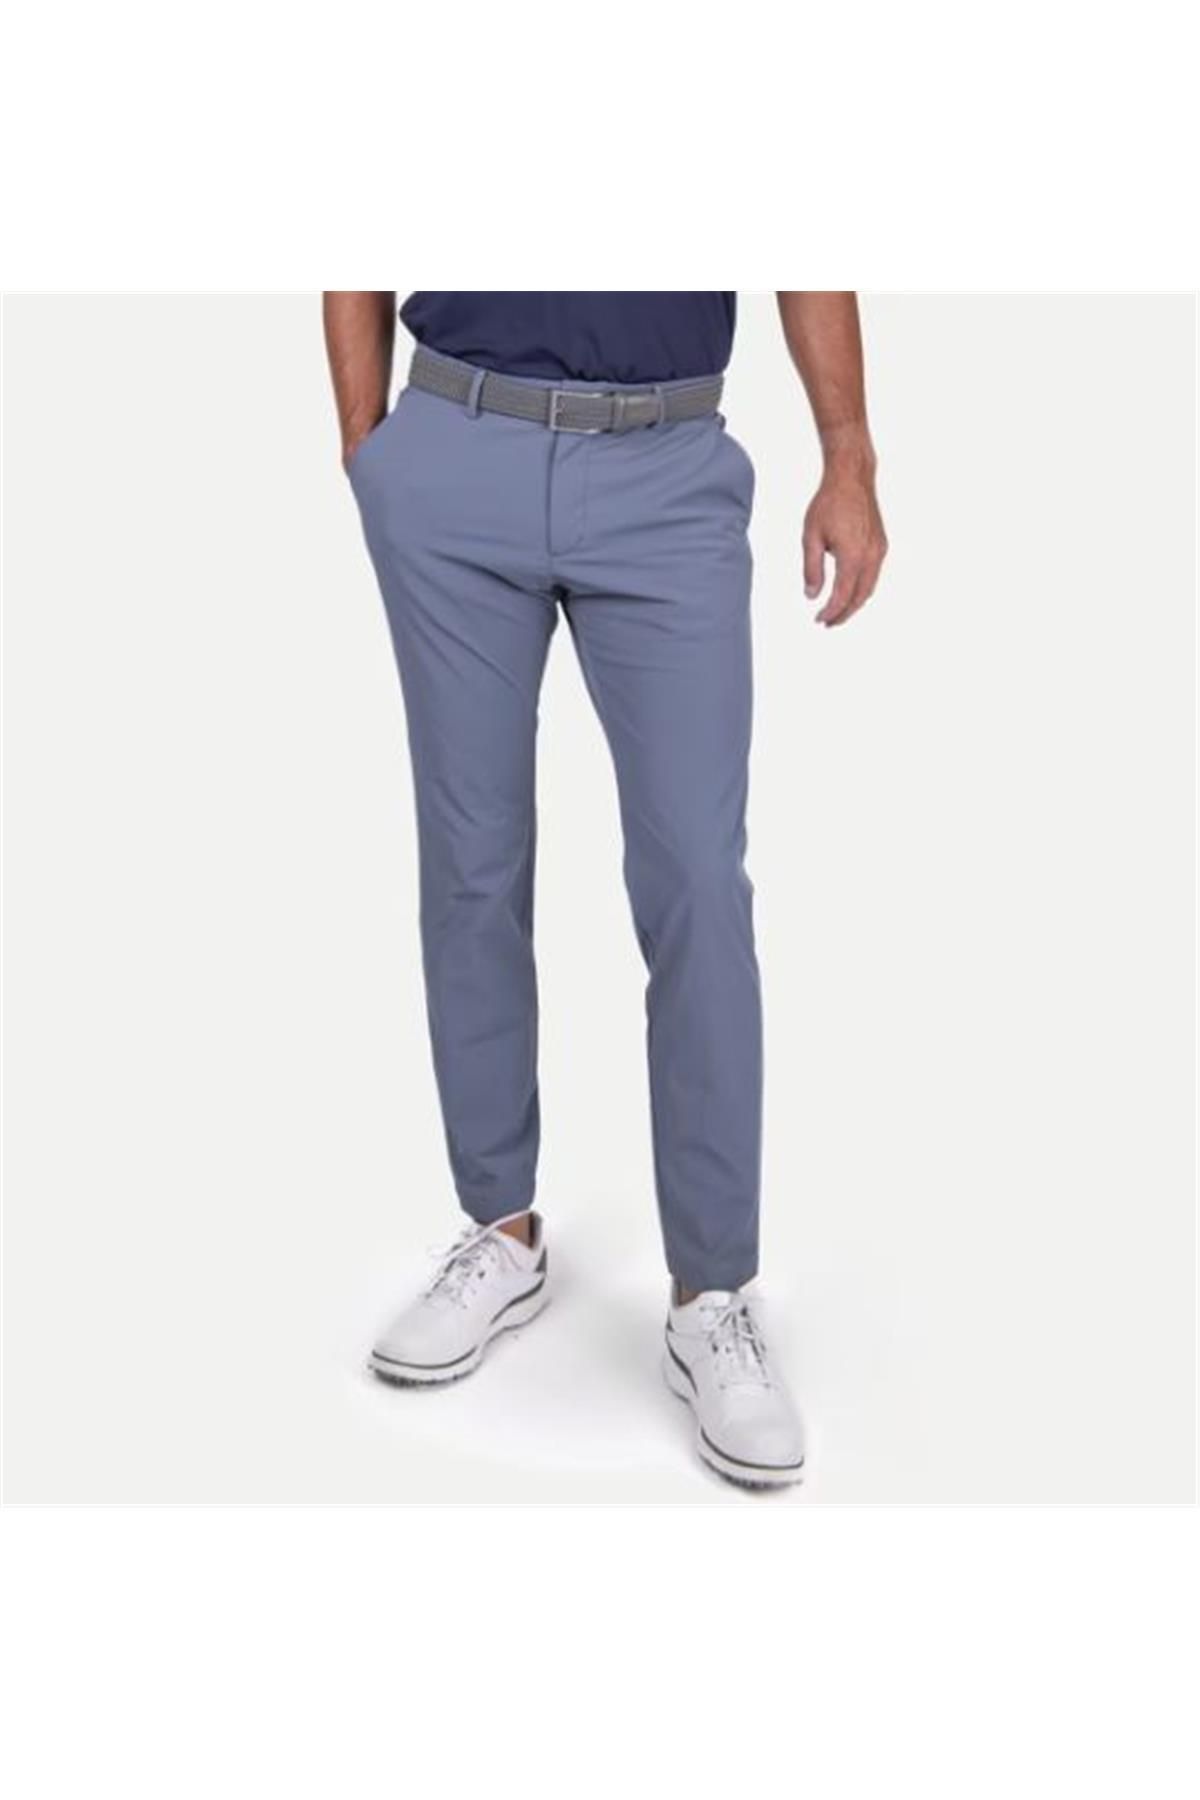 Puma Kjus Iver Mens Tailored Fit Golf Pants / Özel Kesim Erkek Golf Pantolon